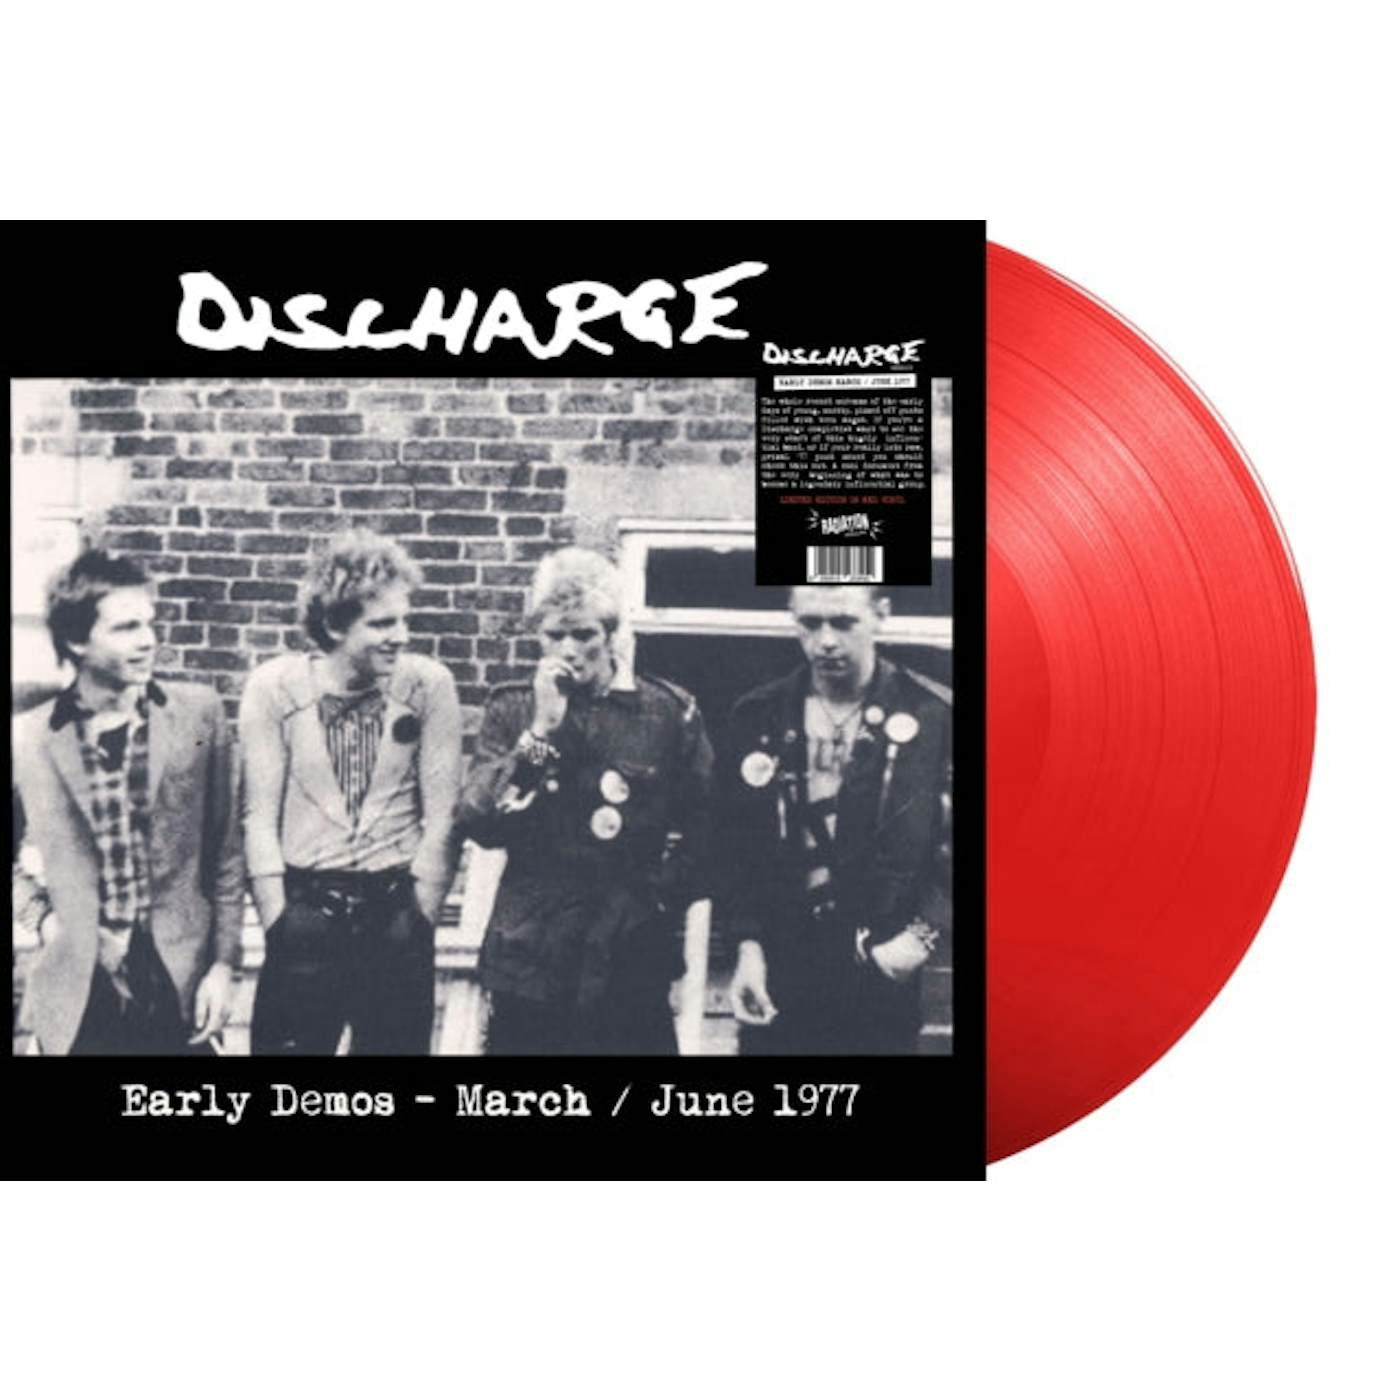 Discharge LP Vinyl Record - Early Demos - March / June 19 77 (Red Vinyl)